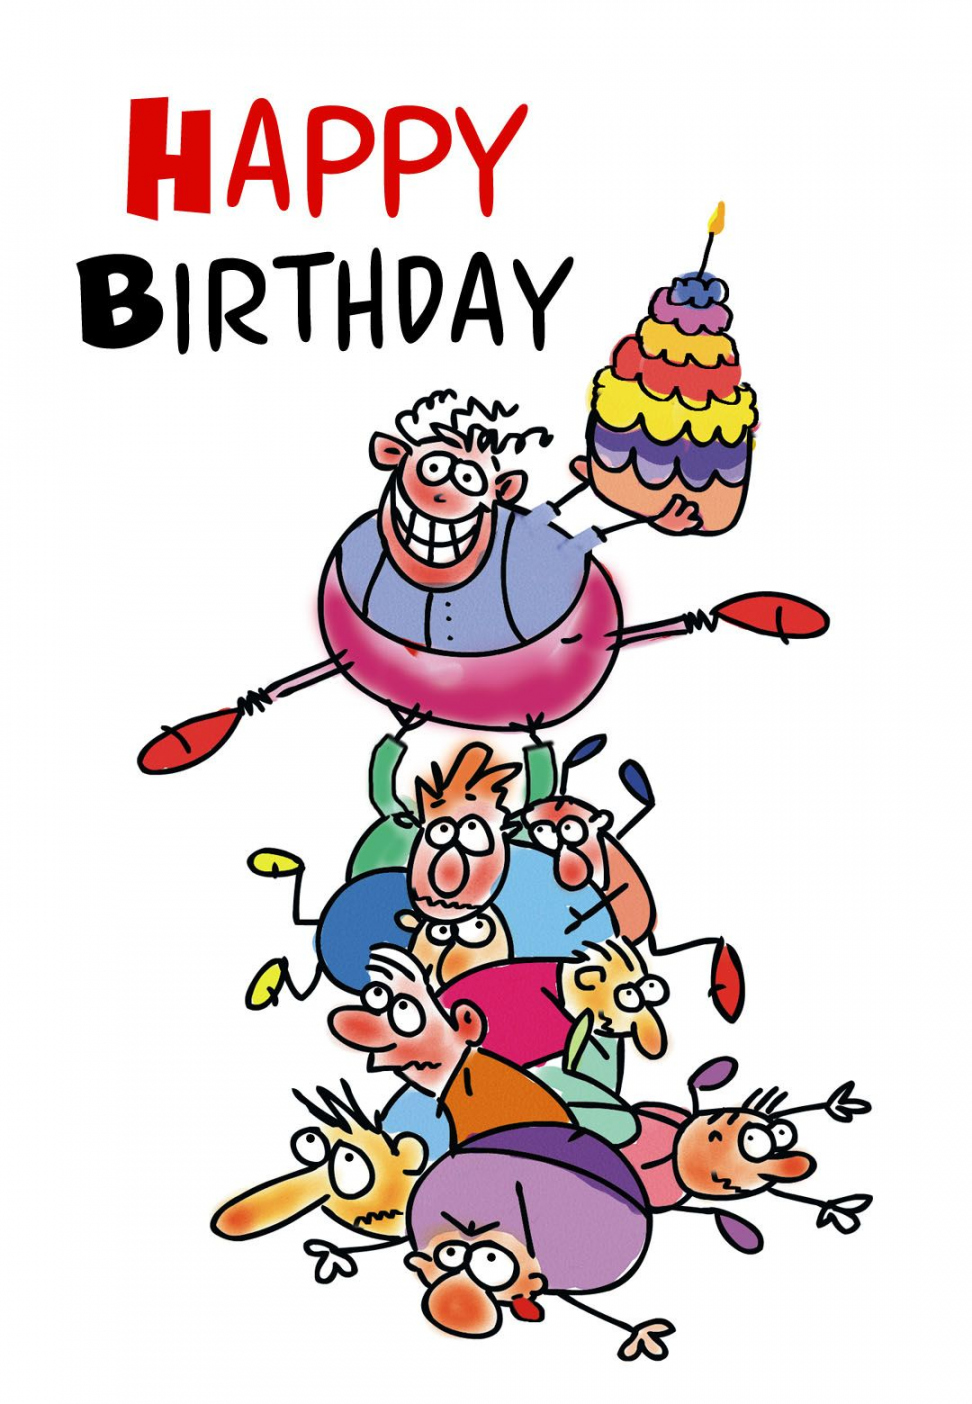 Birthday Cards Free Printable Funny - Printable - Funny Birthday - Free Birthday Card  Greetings Island  Funny